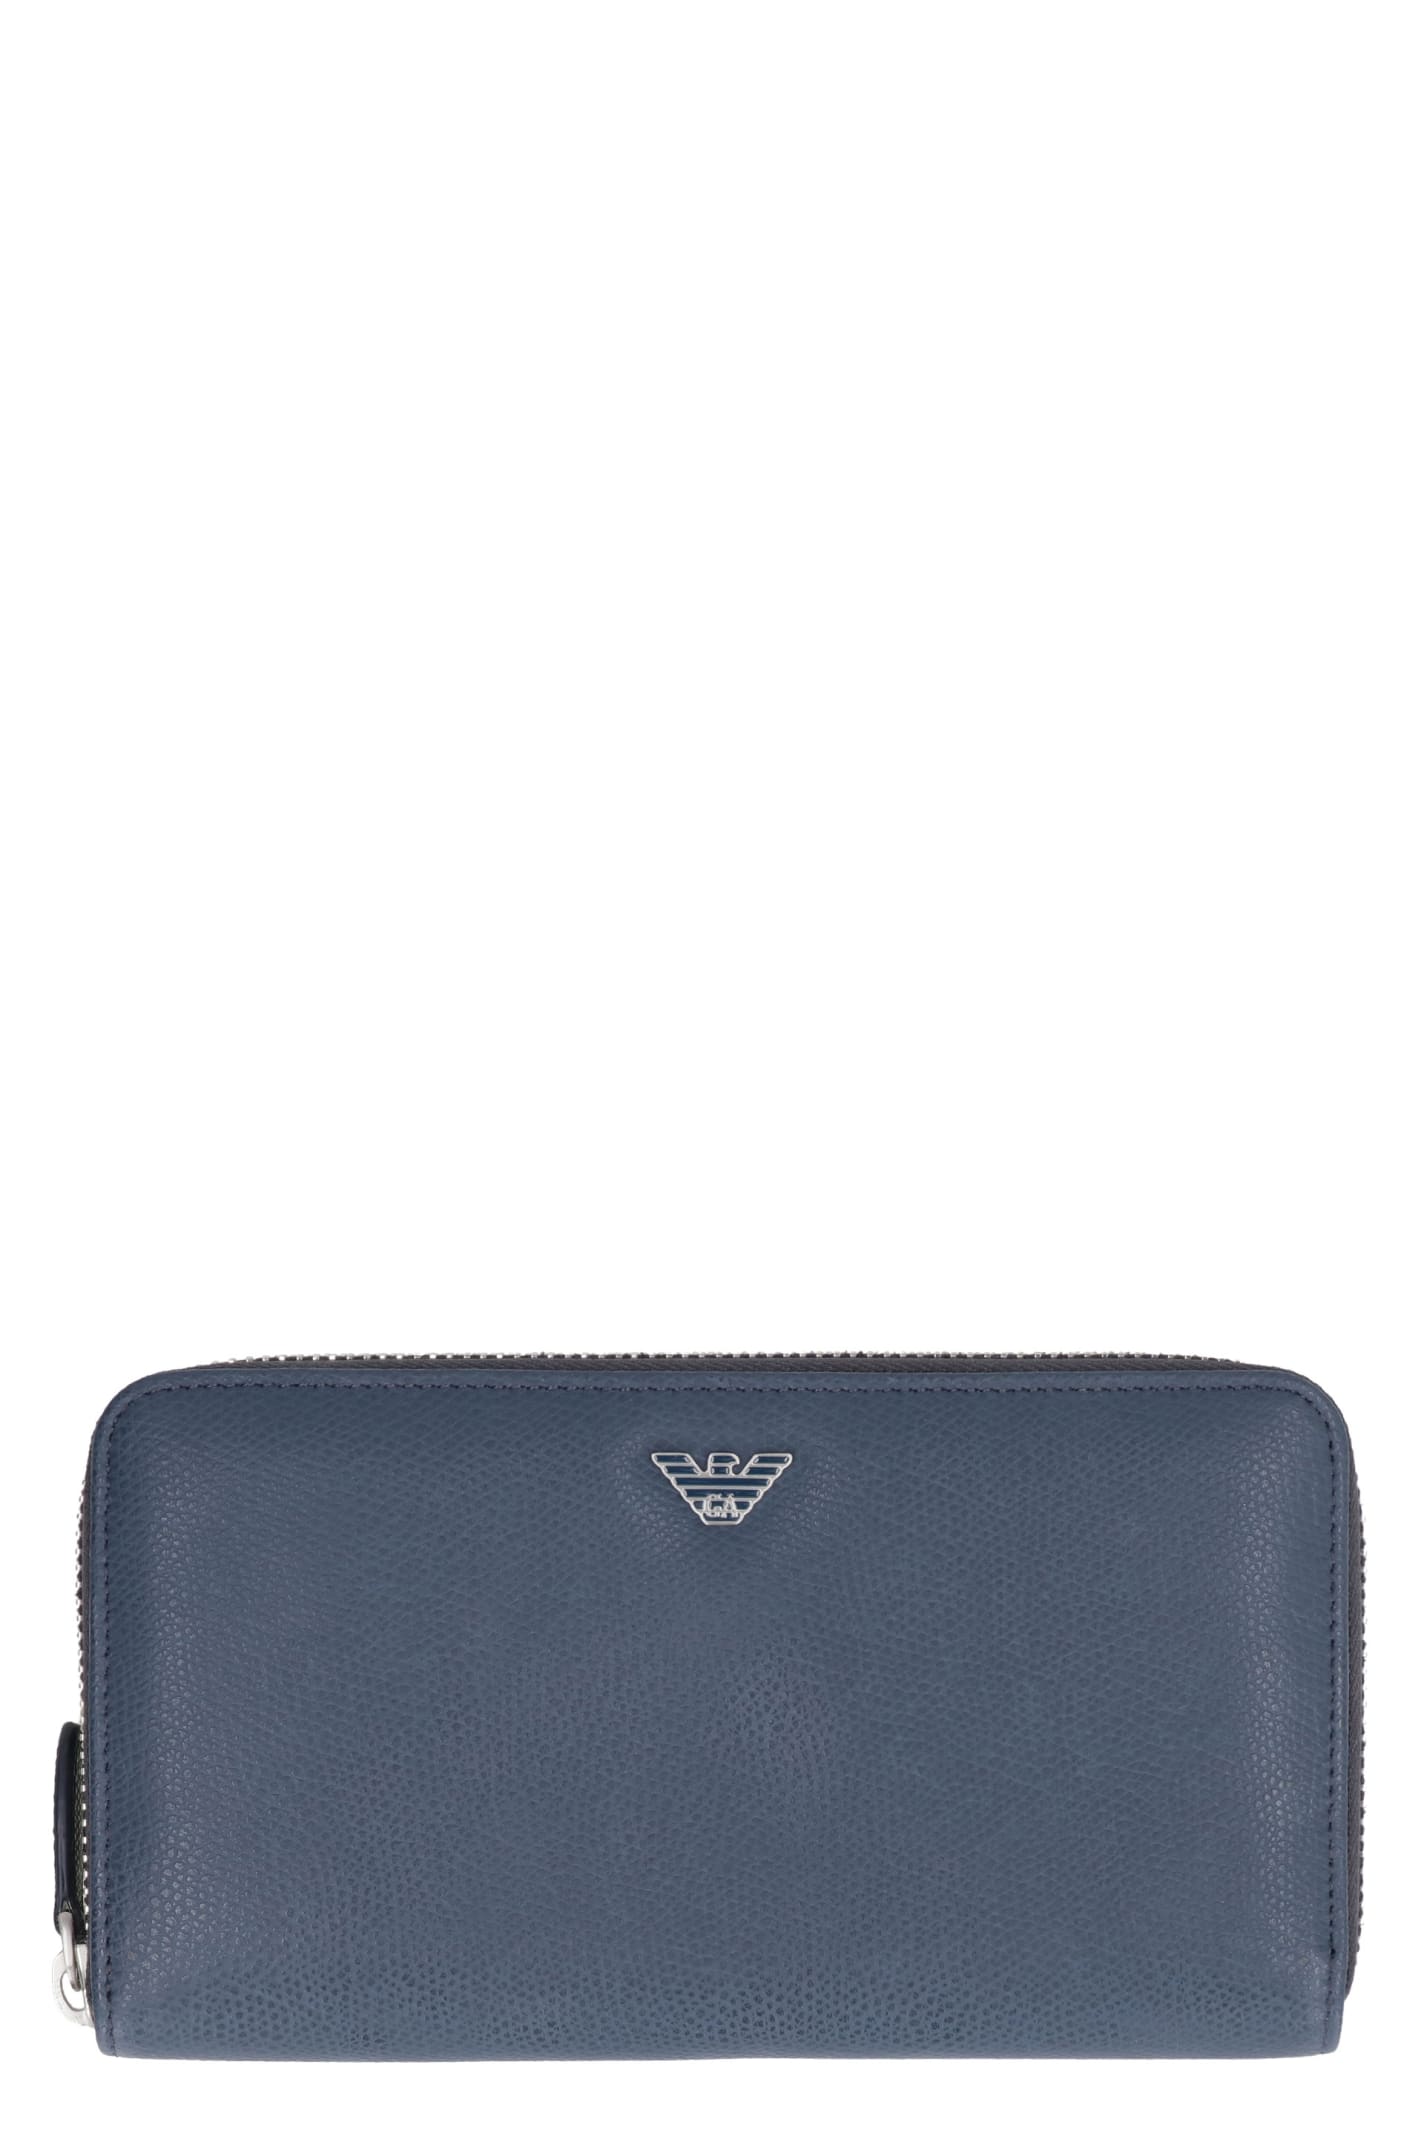 Emporio Armani Leather Zip Around Wallet In Blue